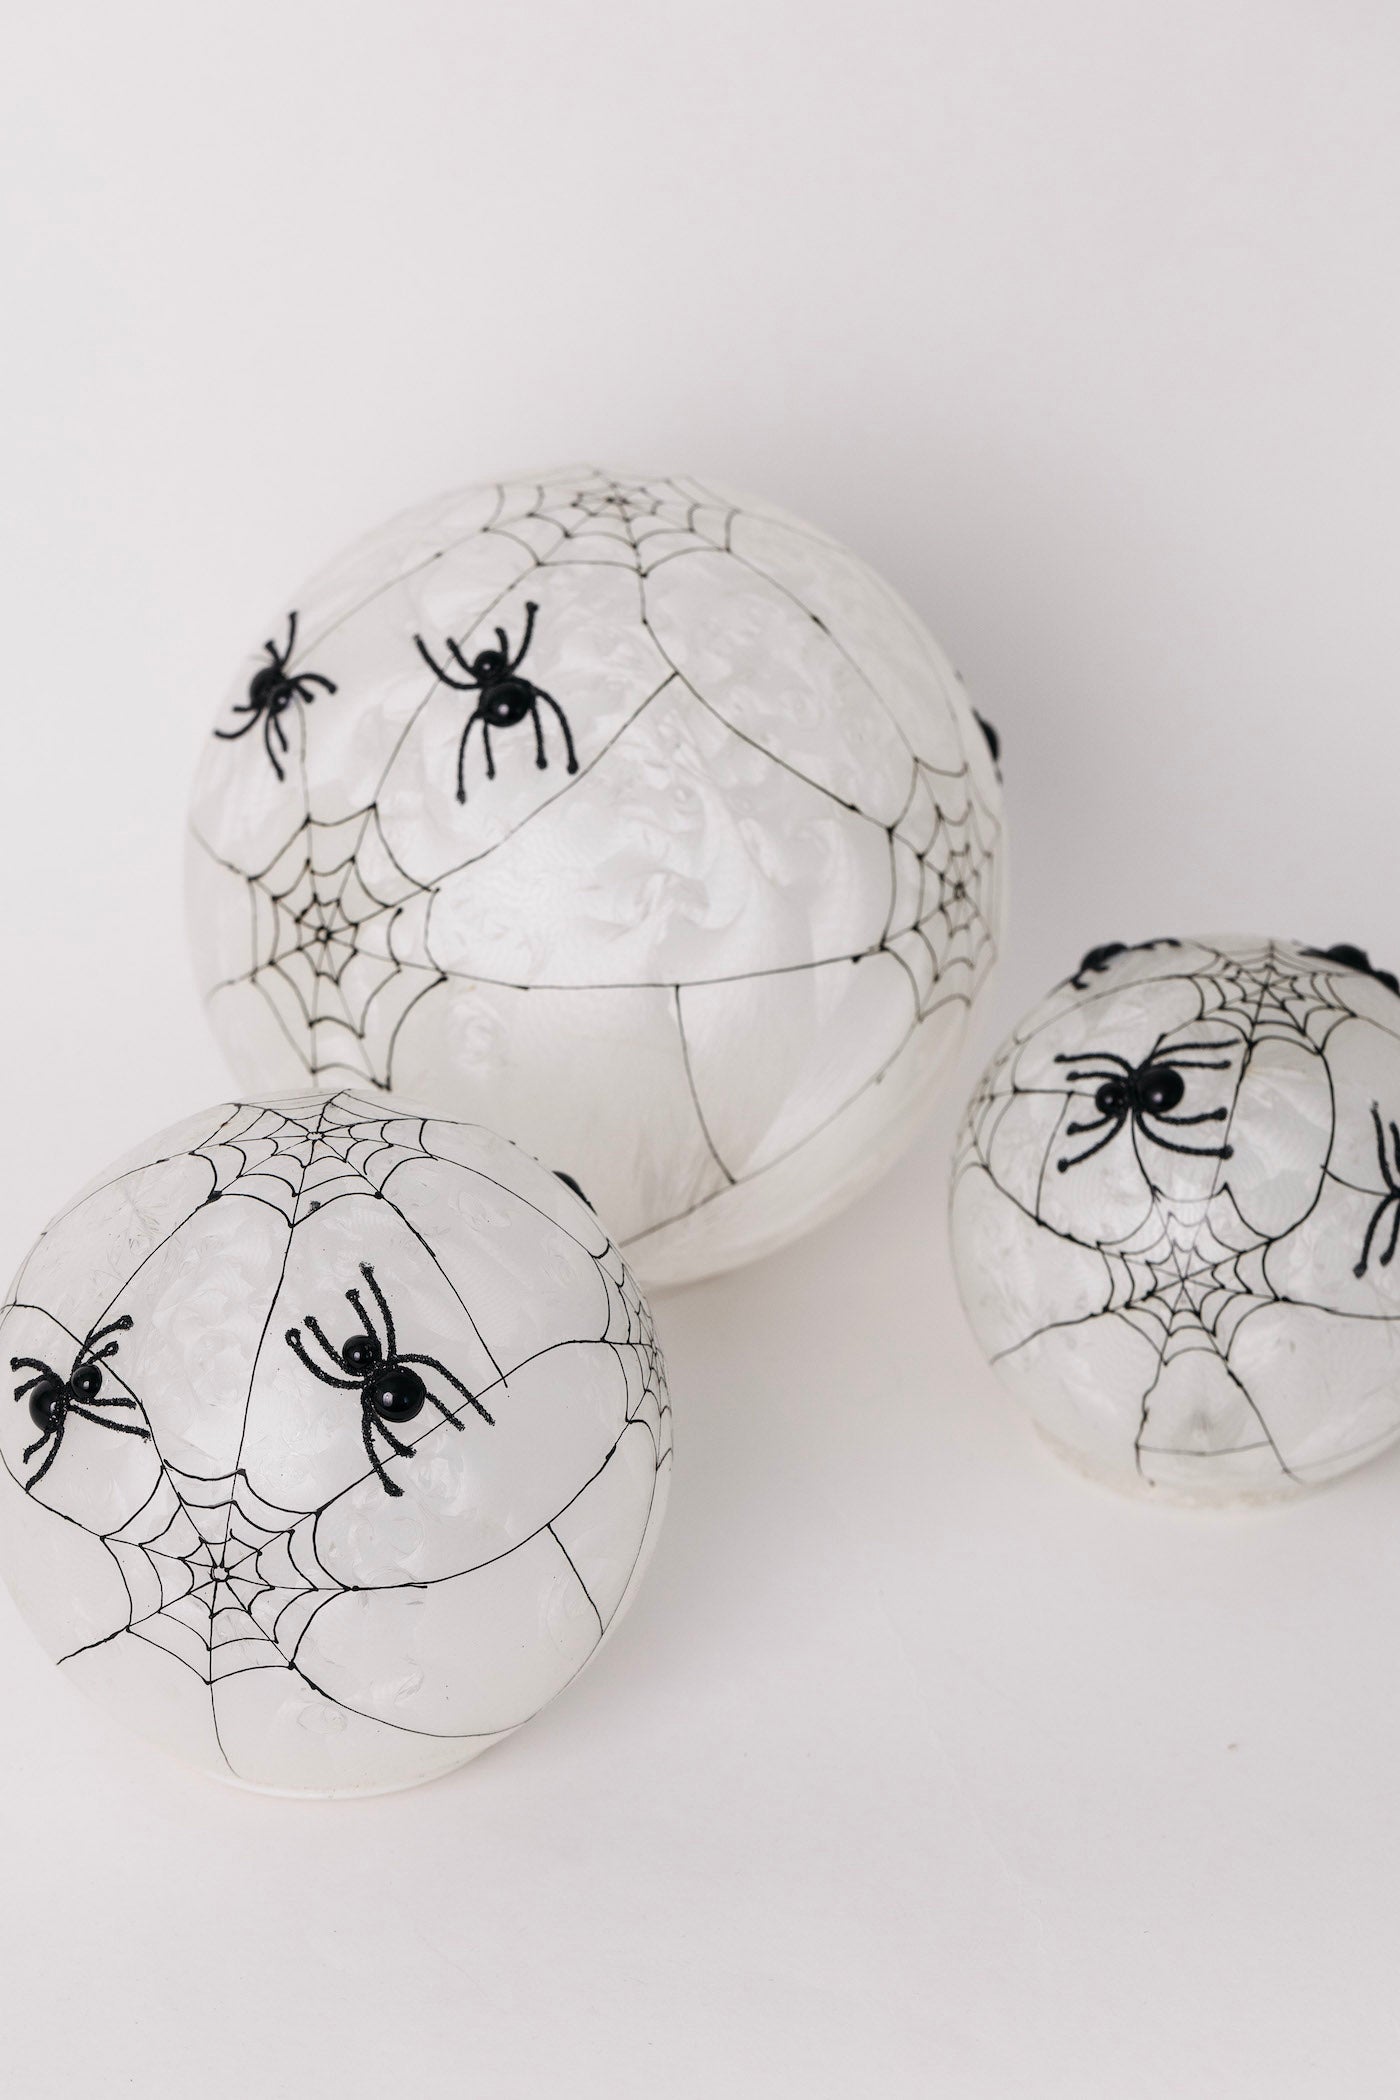 Black Widow Spider Web Orbs - Set of 3